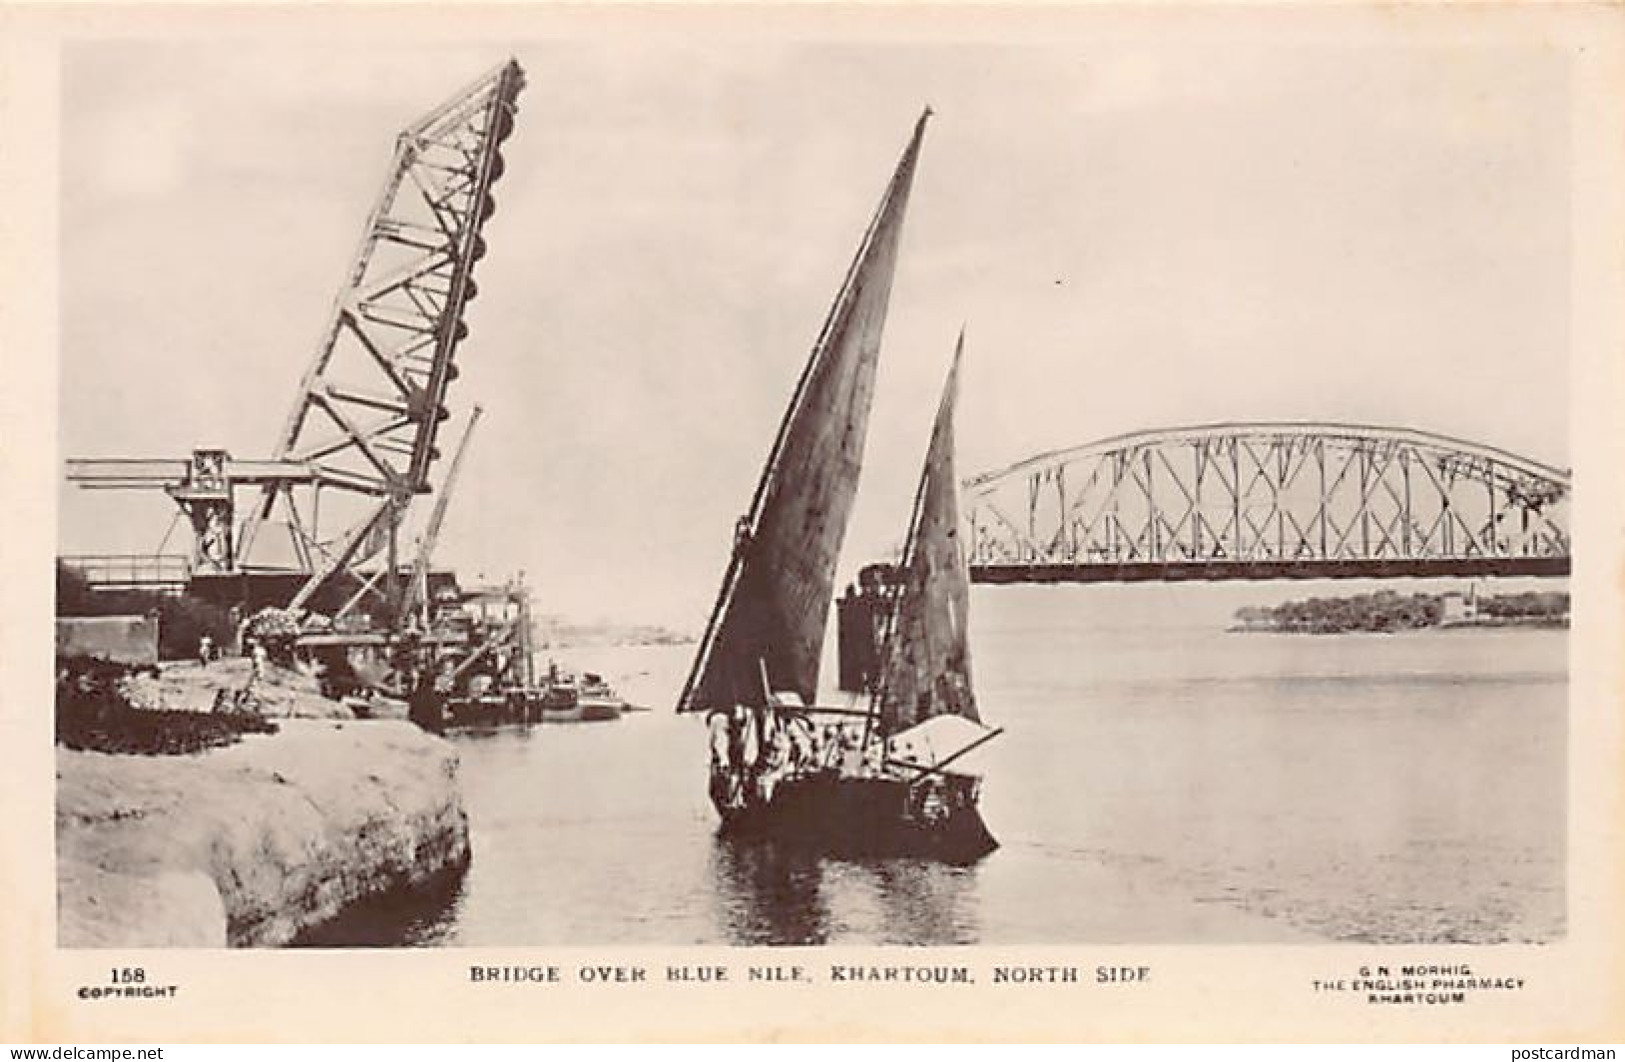 Sudan - KHARTOUM - Bridge Over Blue Nile, North Side - Publ. G. N. Morhig 158 - Sudán